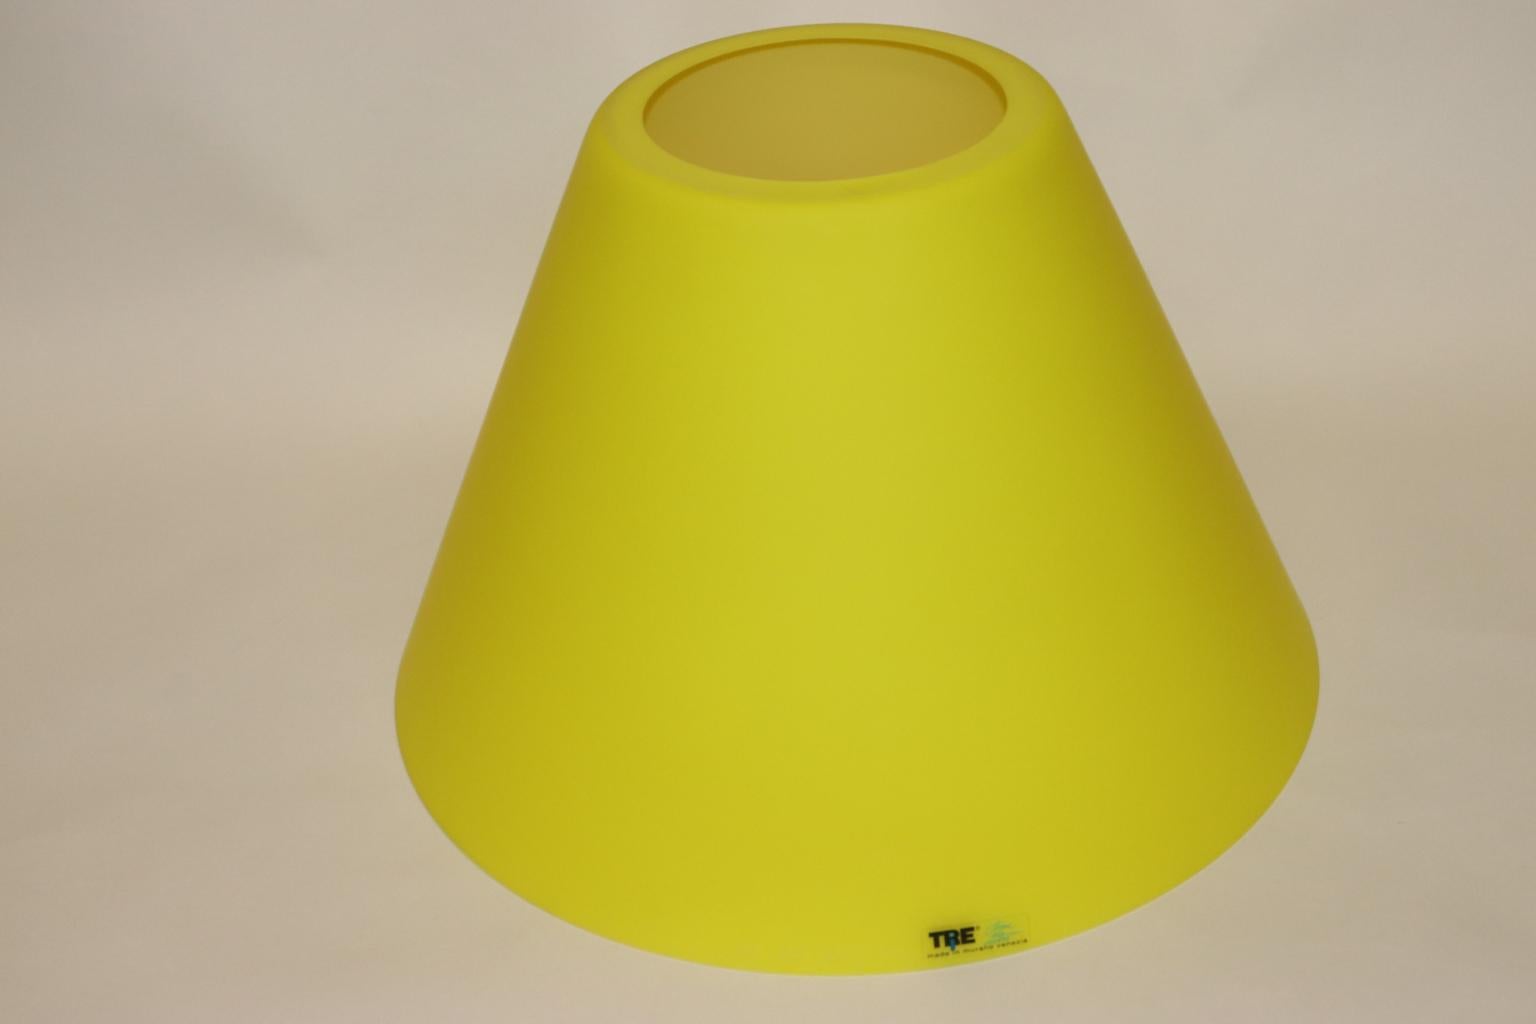 Carlo Nason Floor Lamp Murano Lemon Yellow Glass Diffuser Fuchsia Anodized Stem For Sale 4